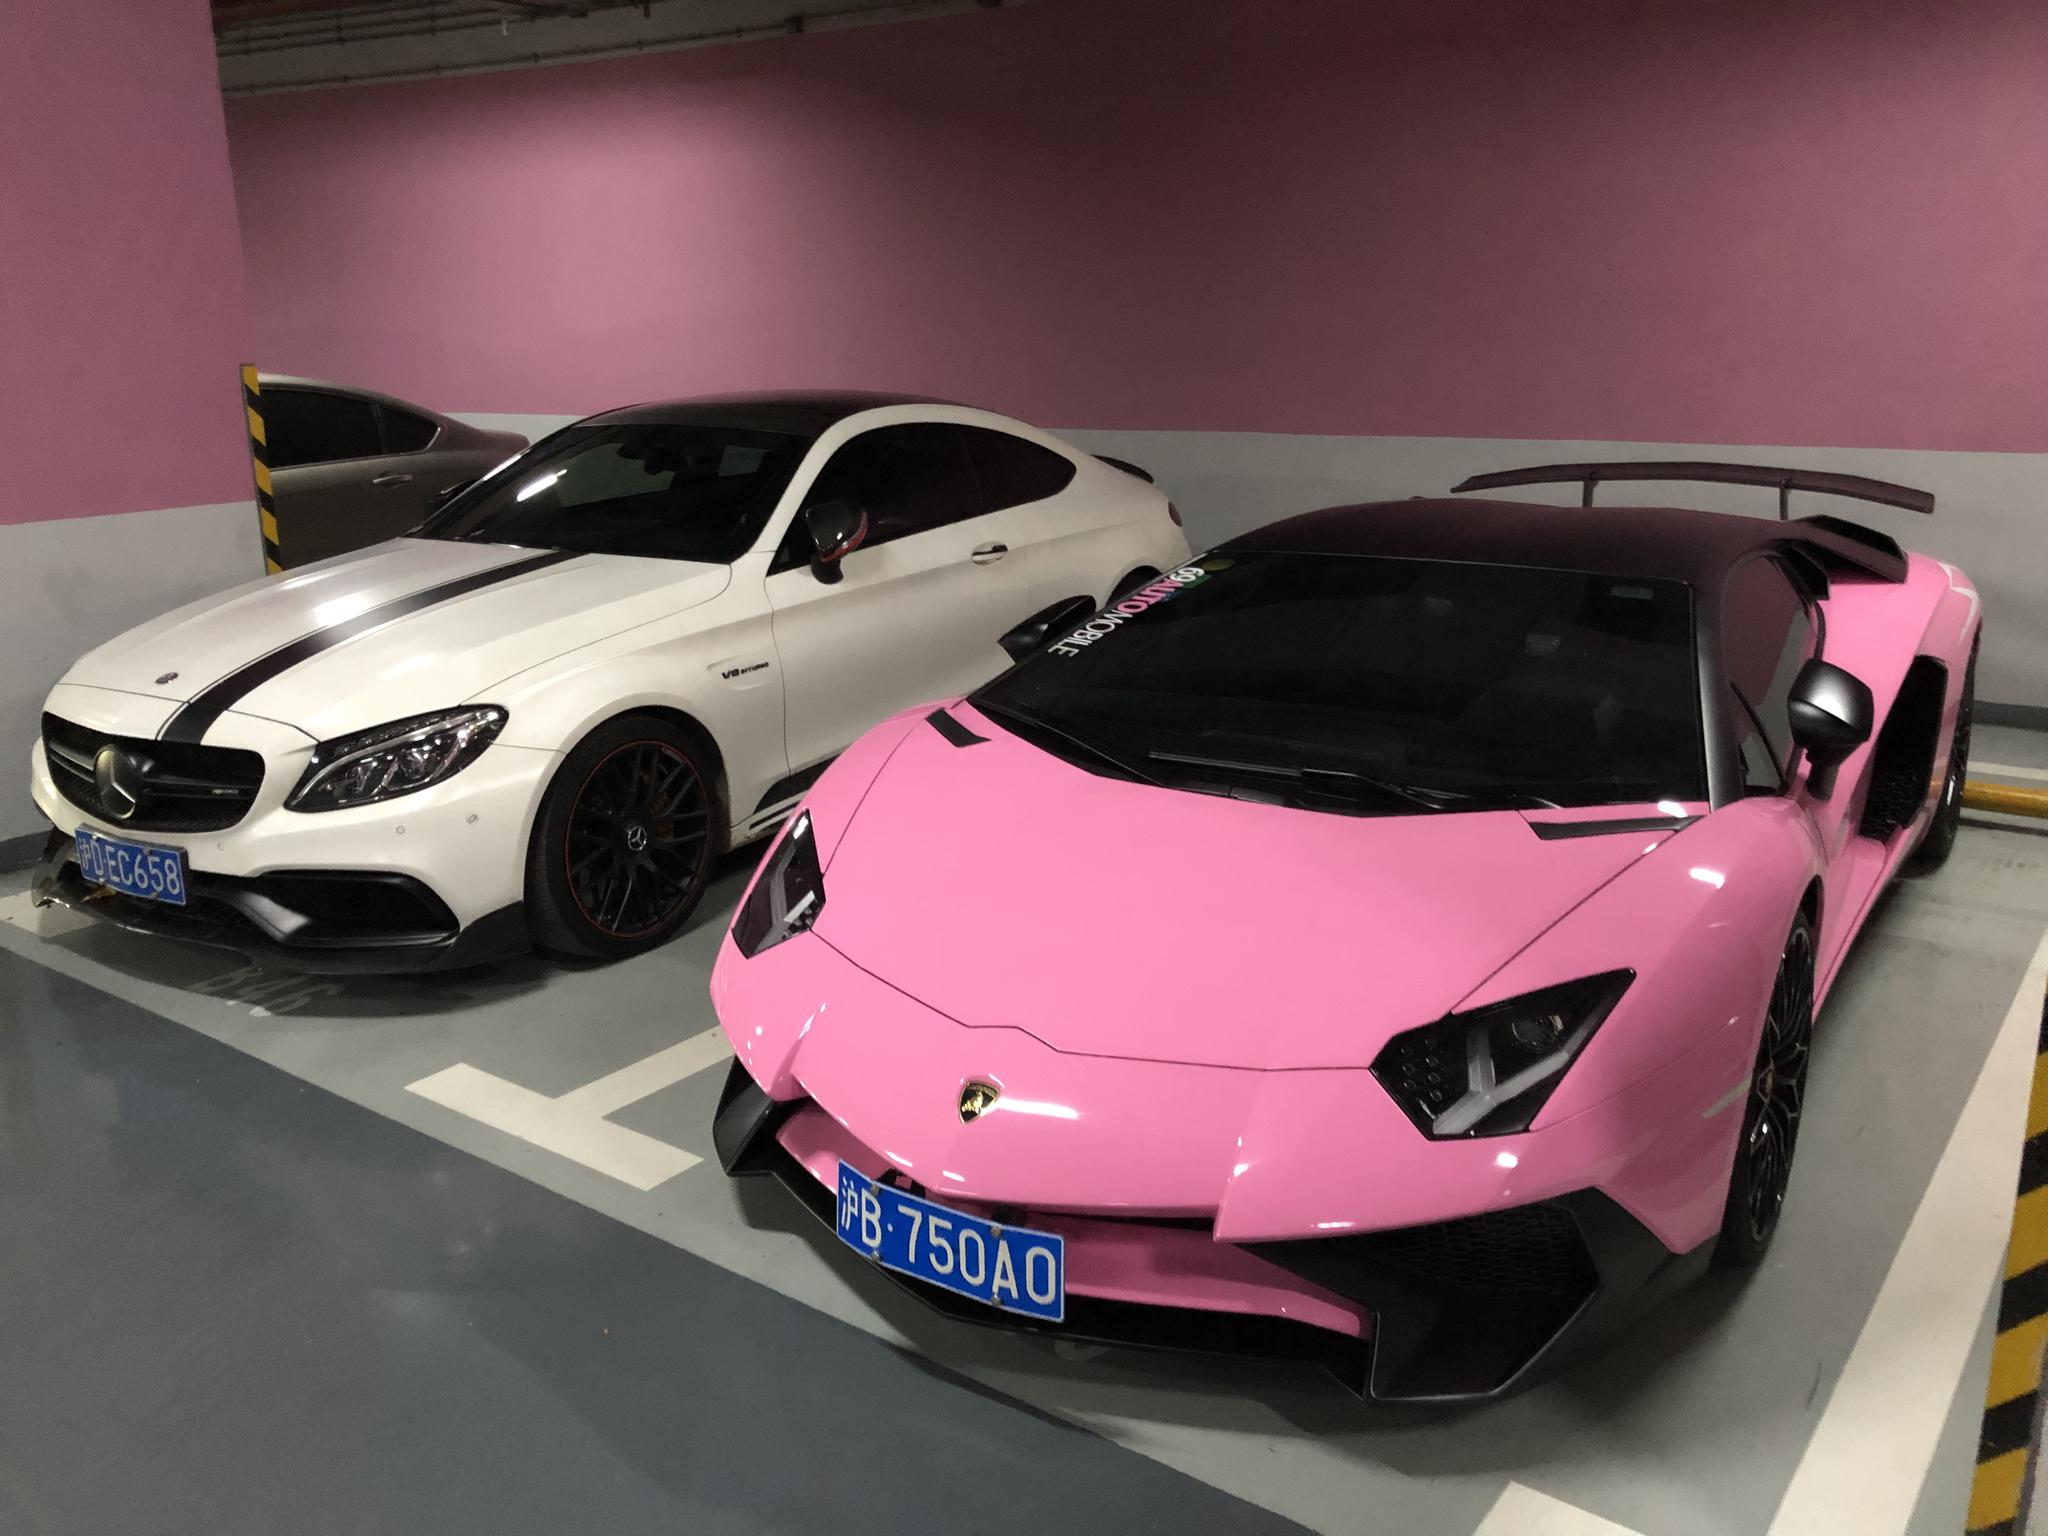 Hot Pink Lamborghini Wallpaper